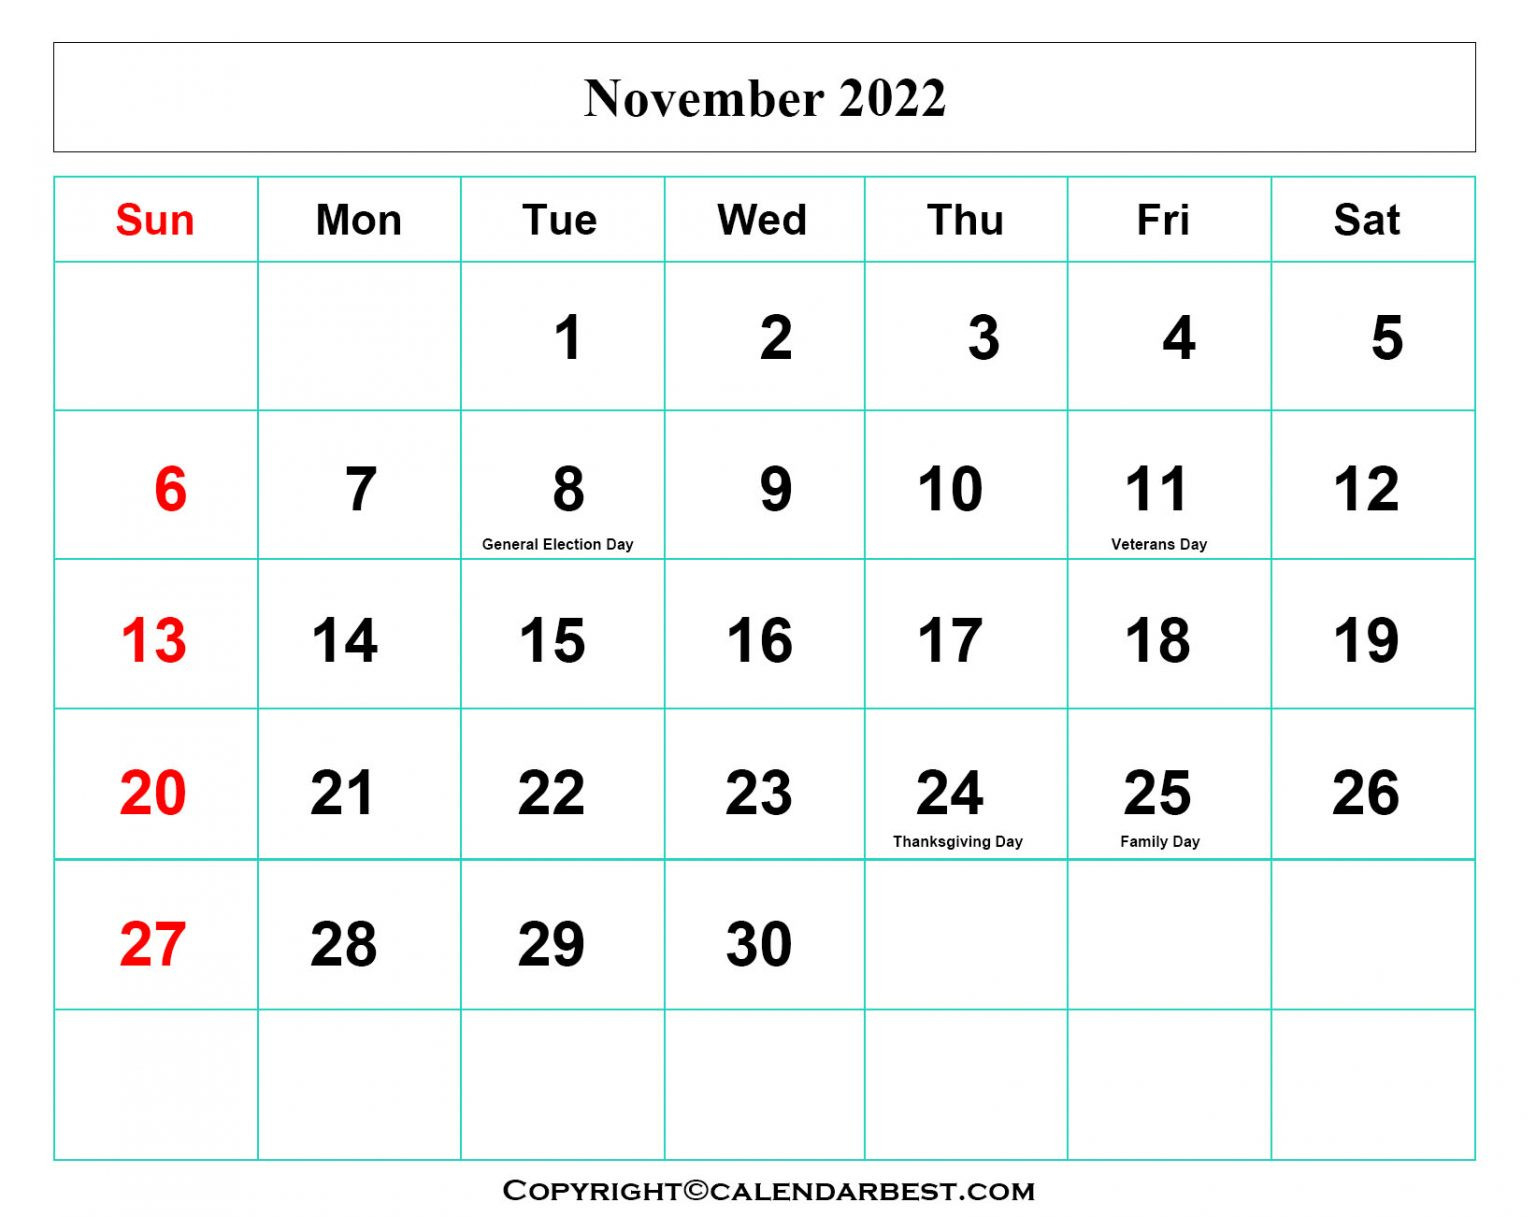 Free Printable November Calendar 2022 With Holidays  November 2022 To June 2022 Calendar